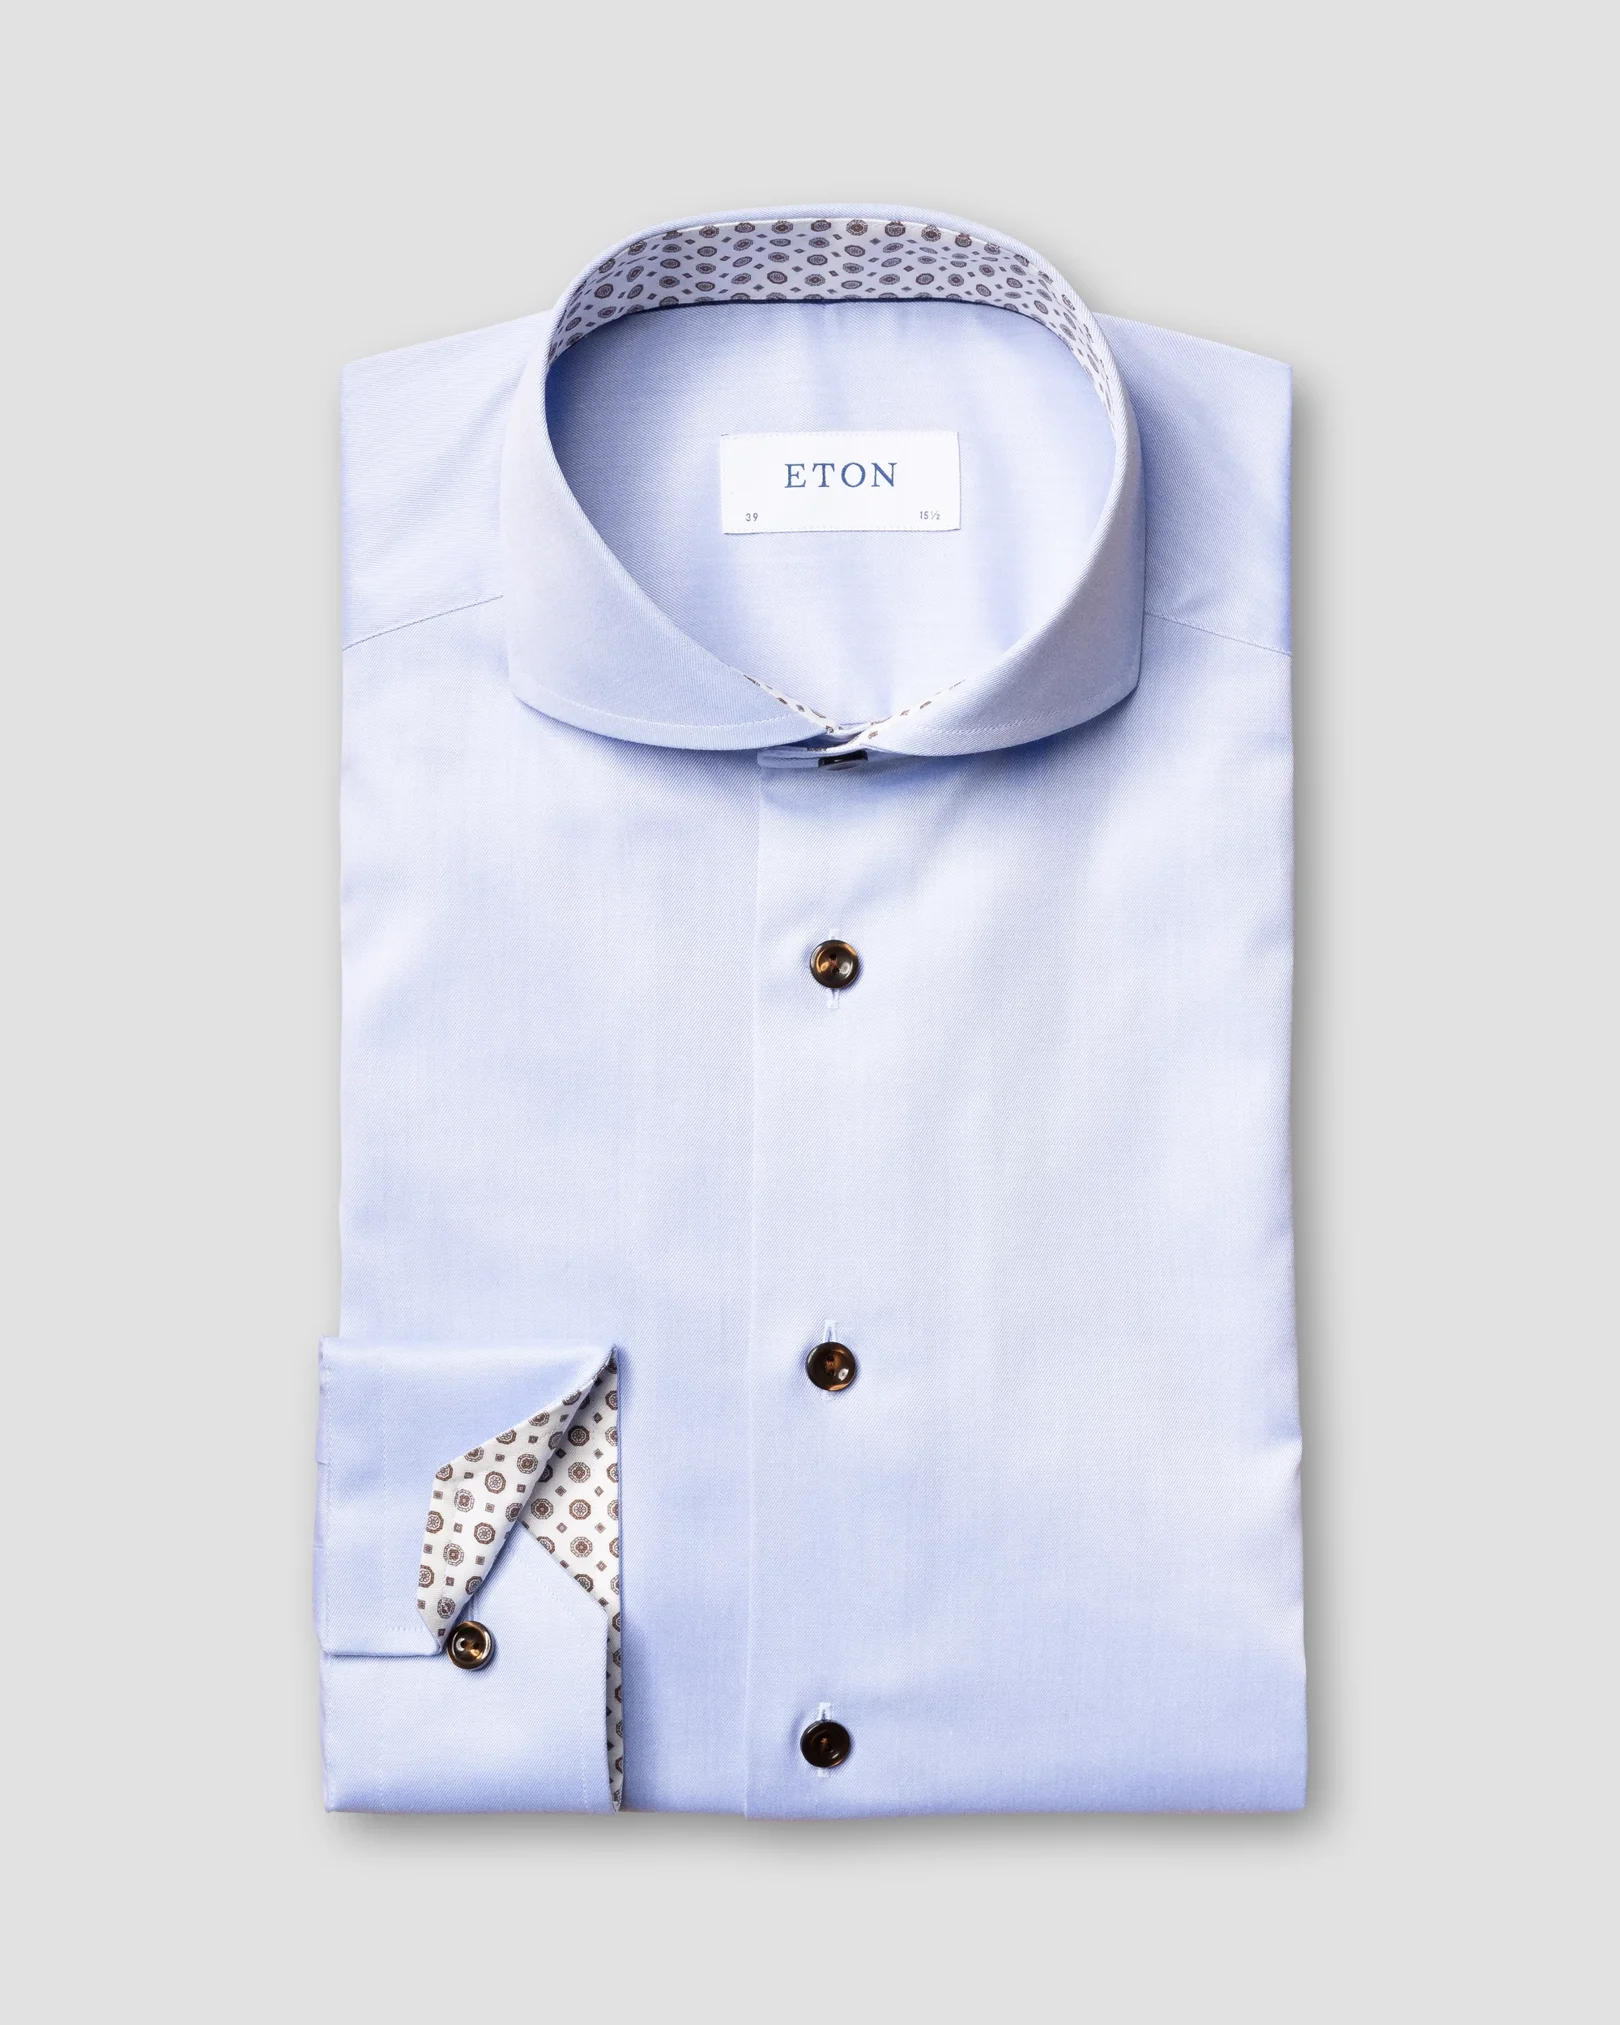 Eton - light blue twill shirt medallion details extreme cut away